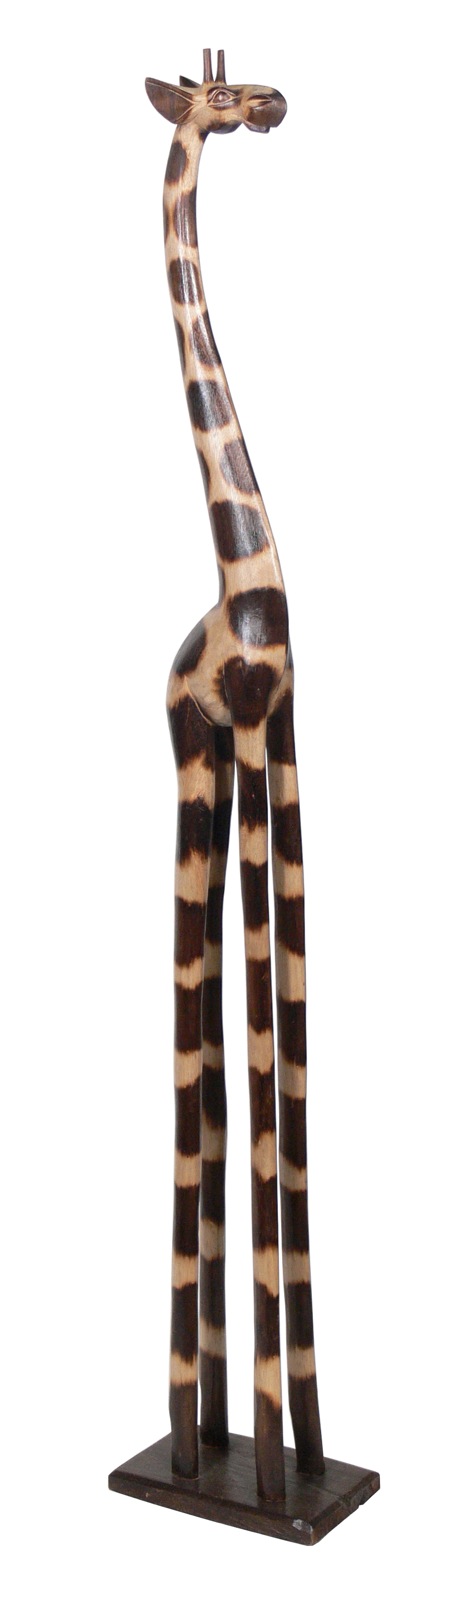 81970 Giraffe (H : 150 - 200 cm)